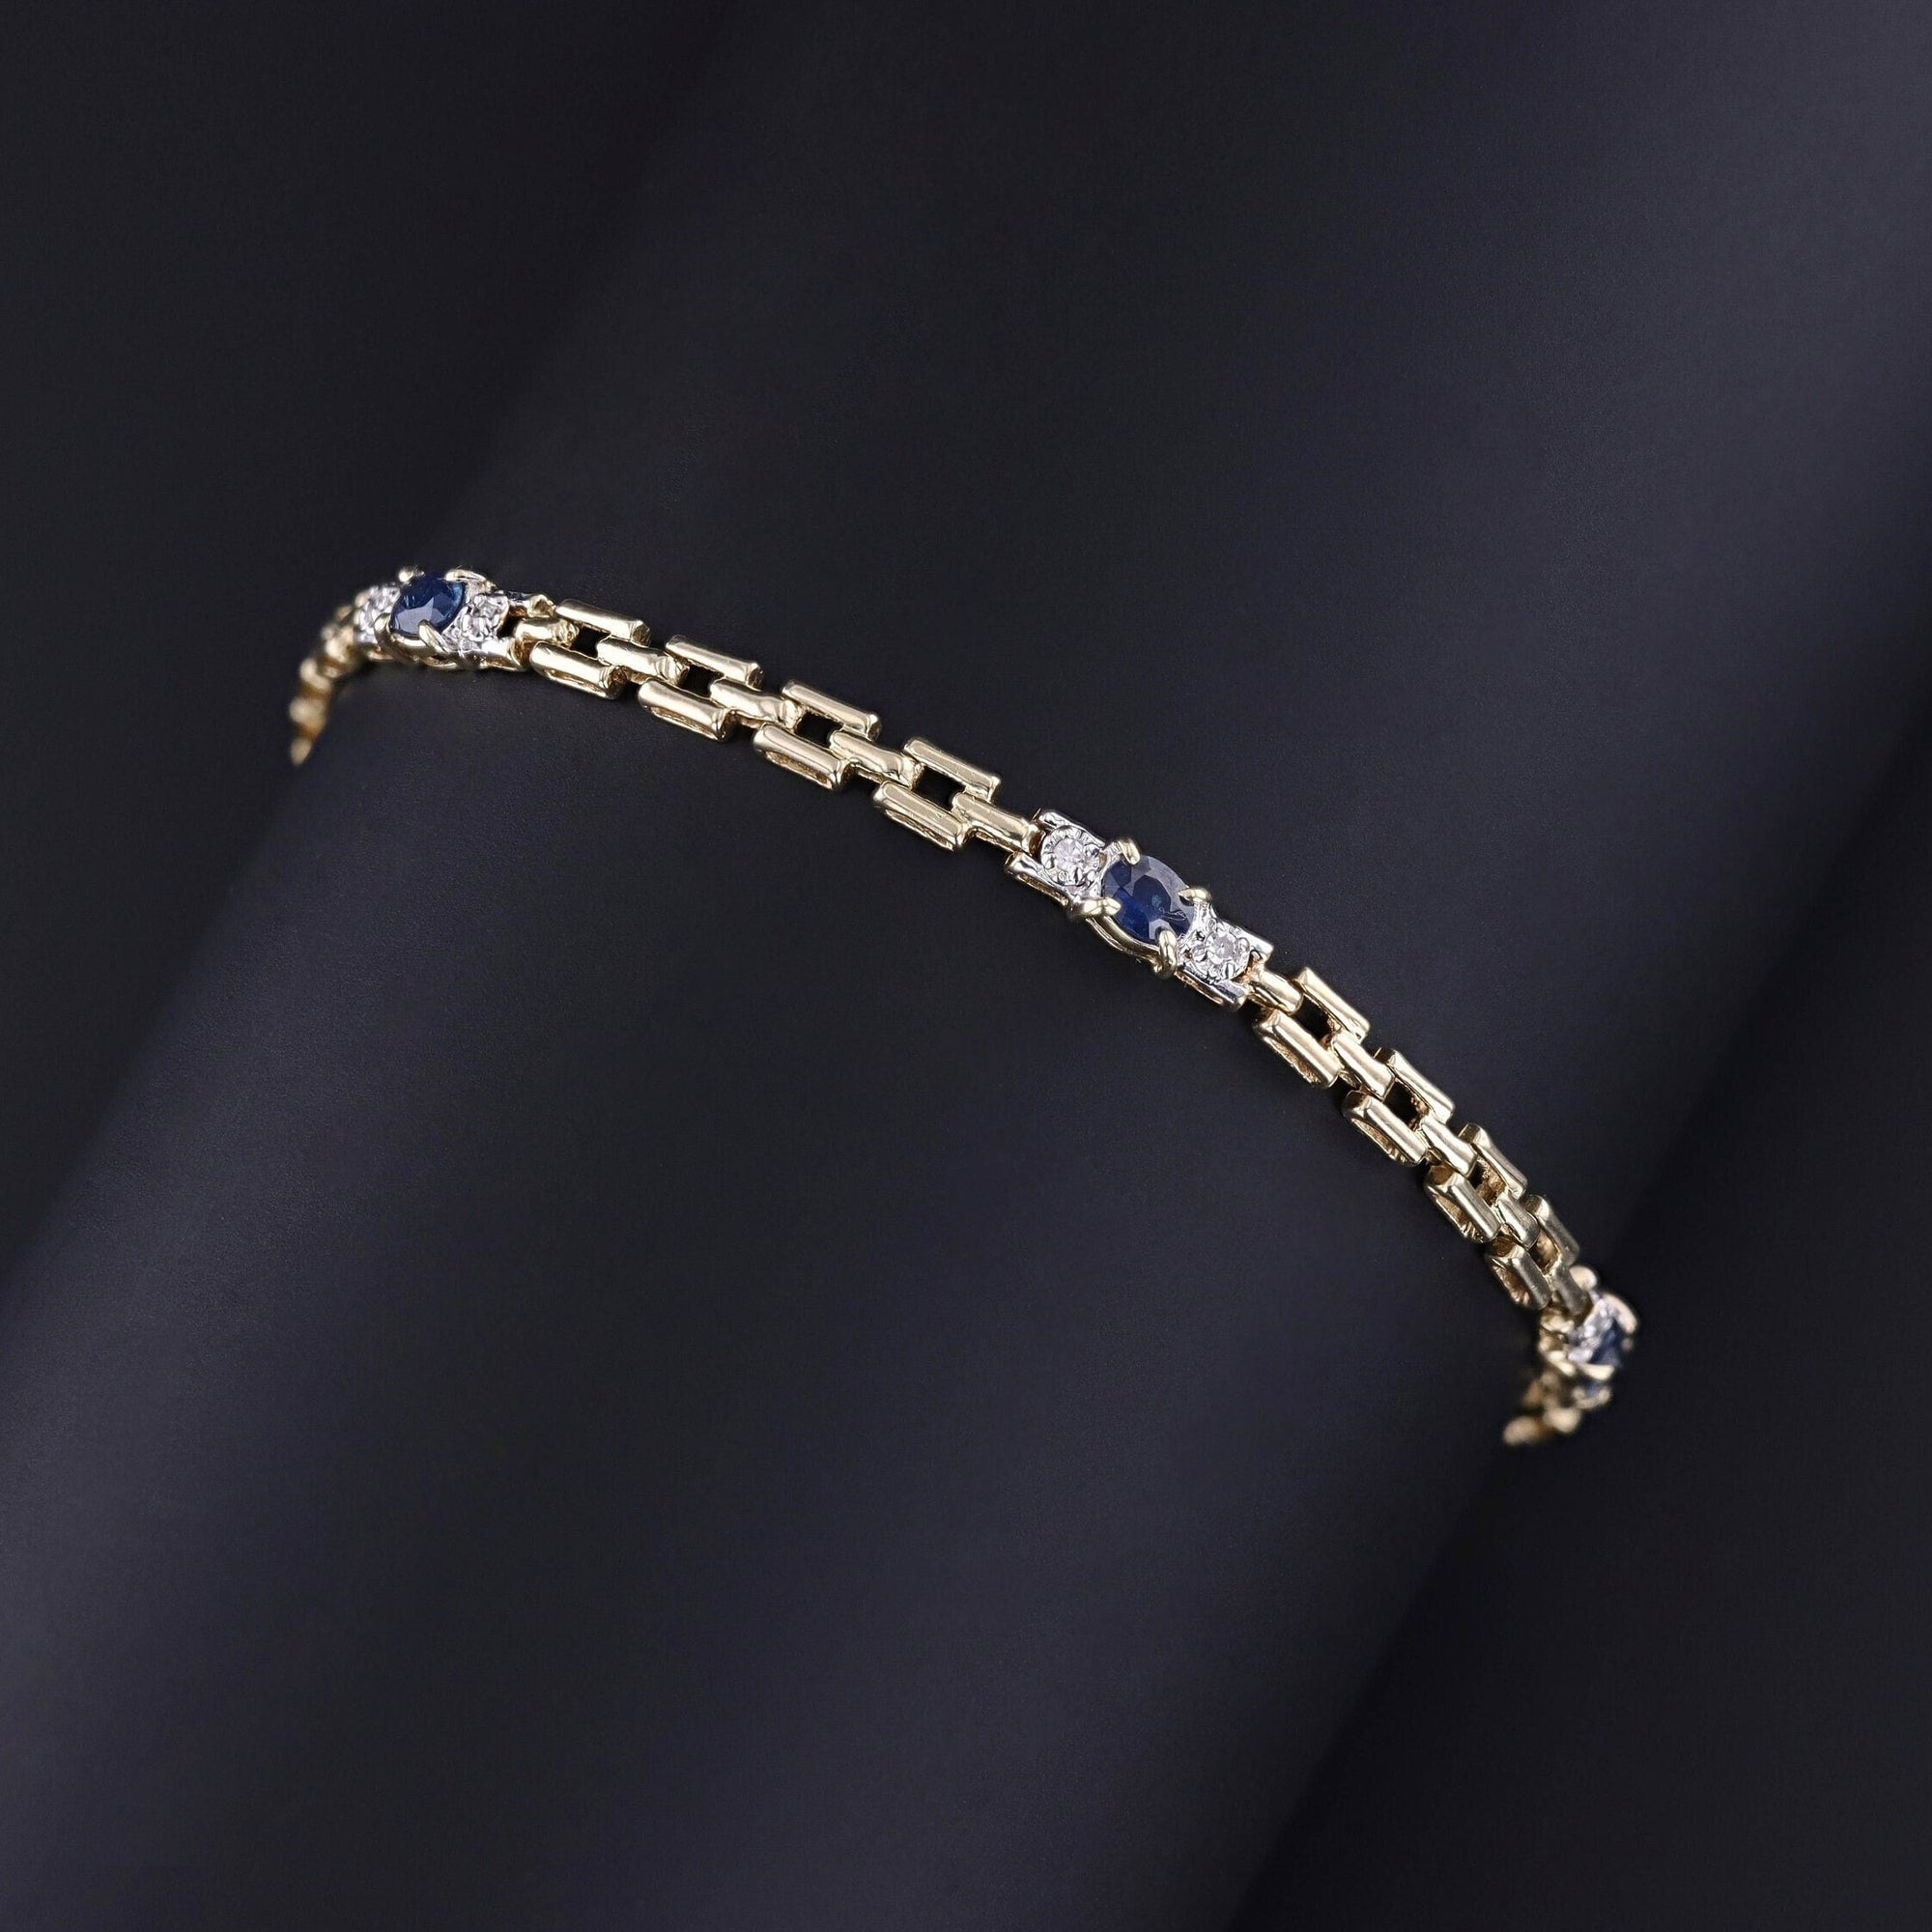 Vintage Sapphire and Diamond Bracelet of 14k Gold